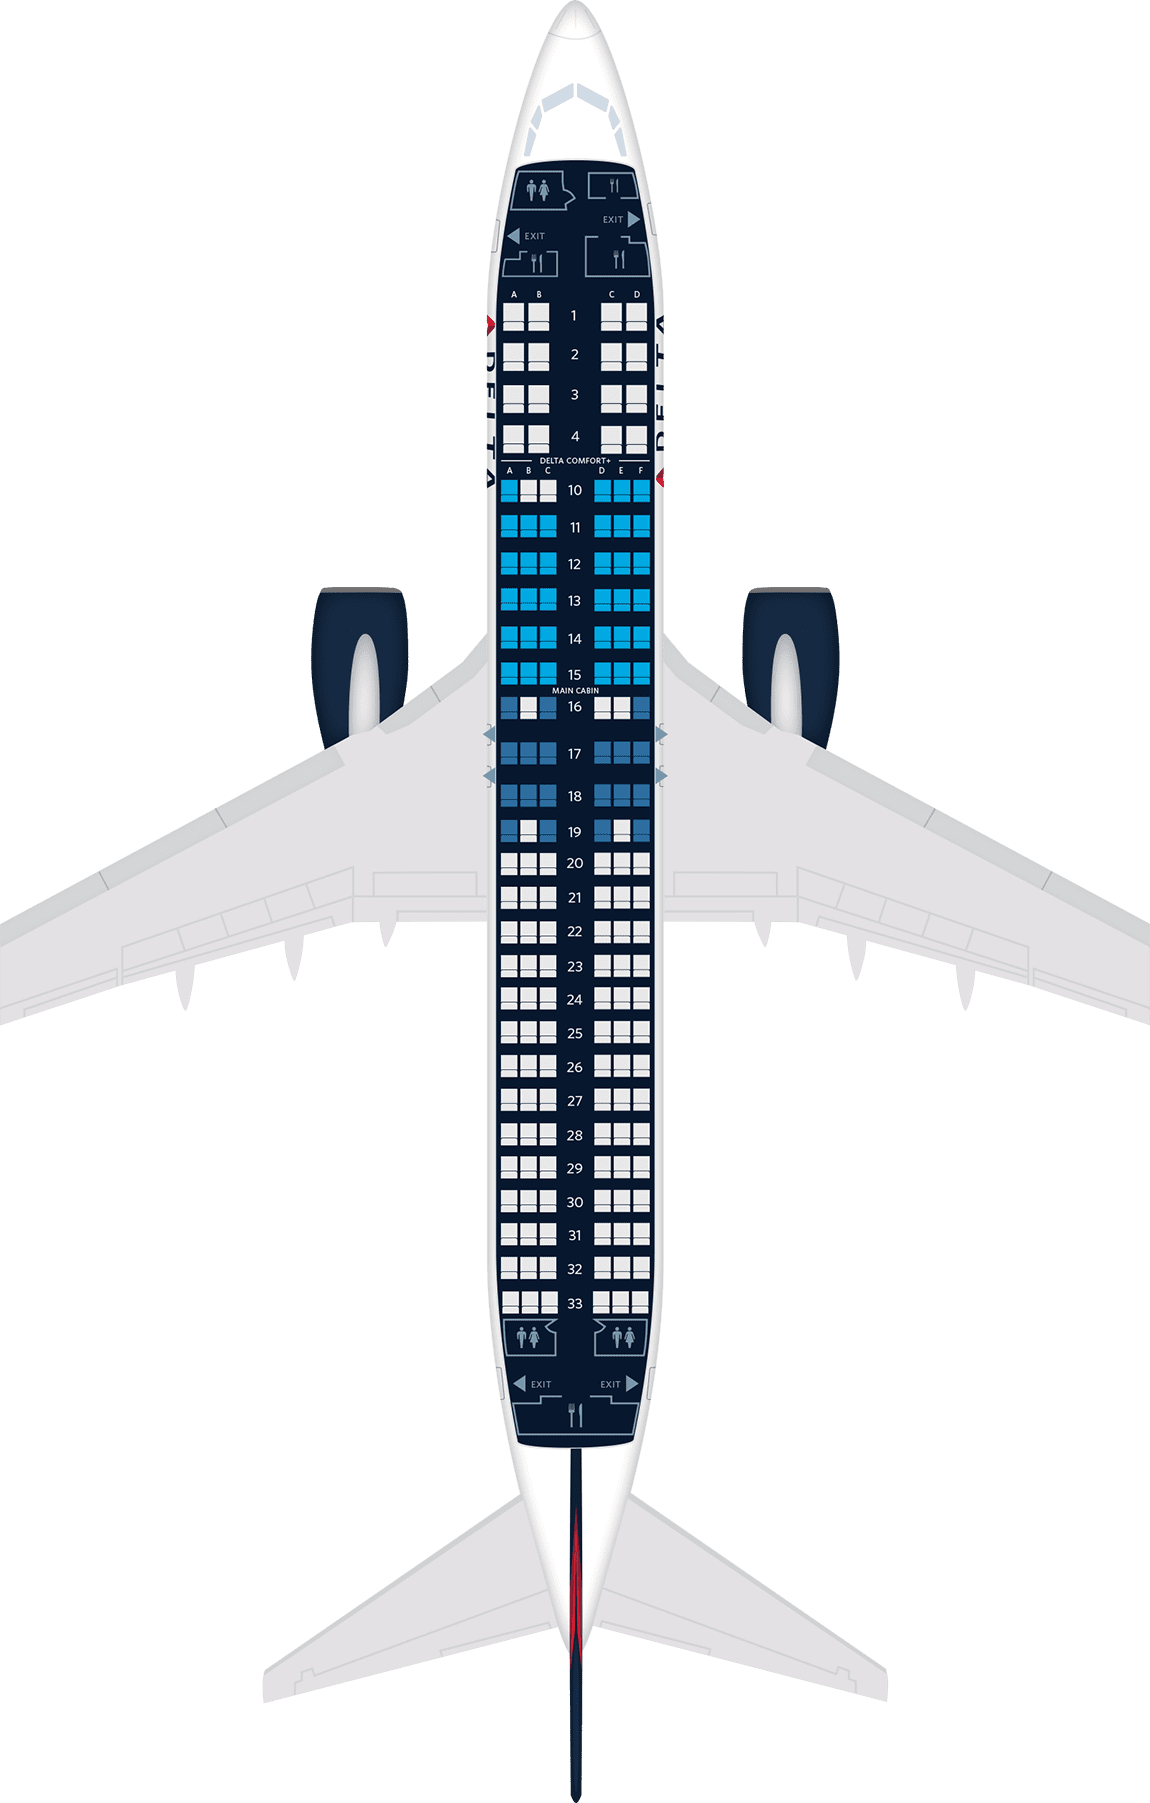 Delta Boeing 737 800 Cabin Layouts